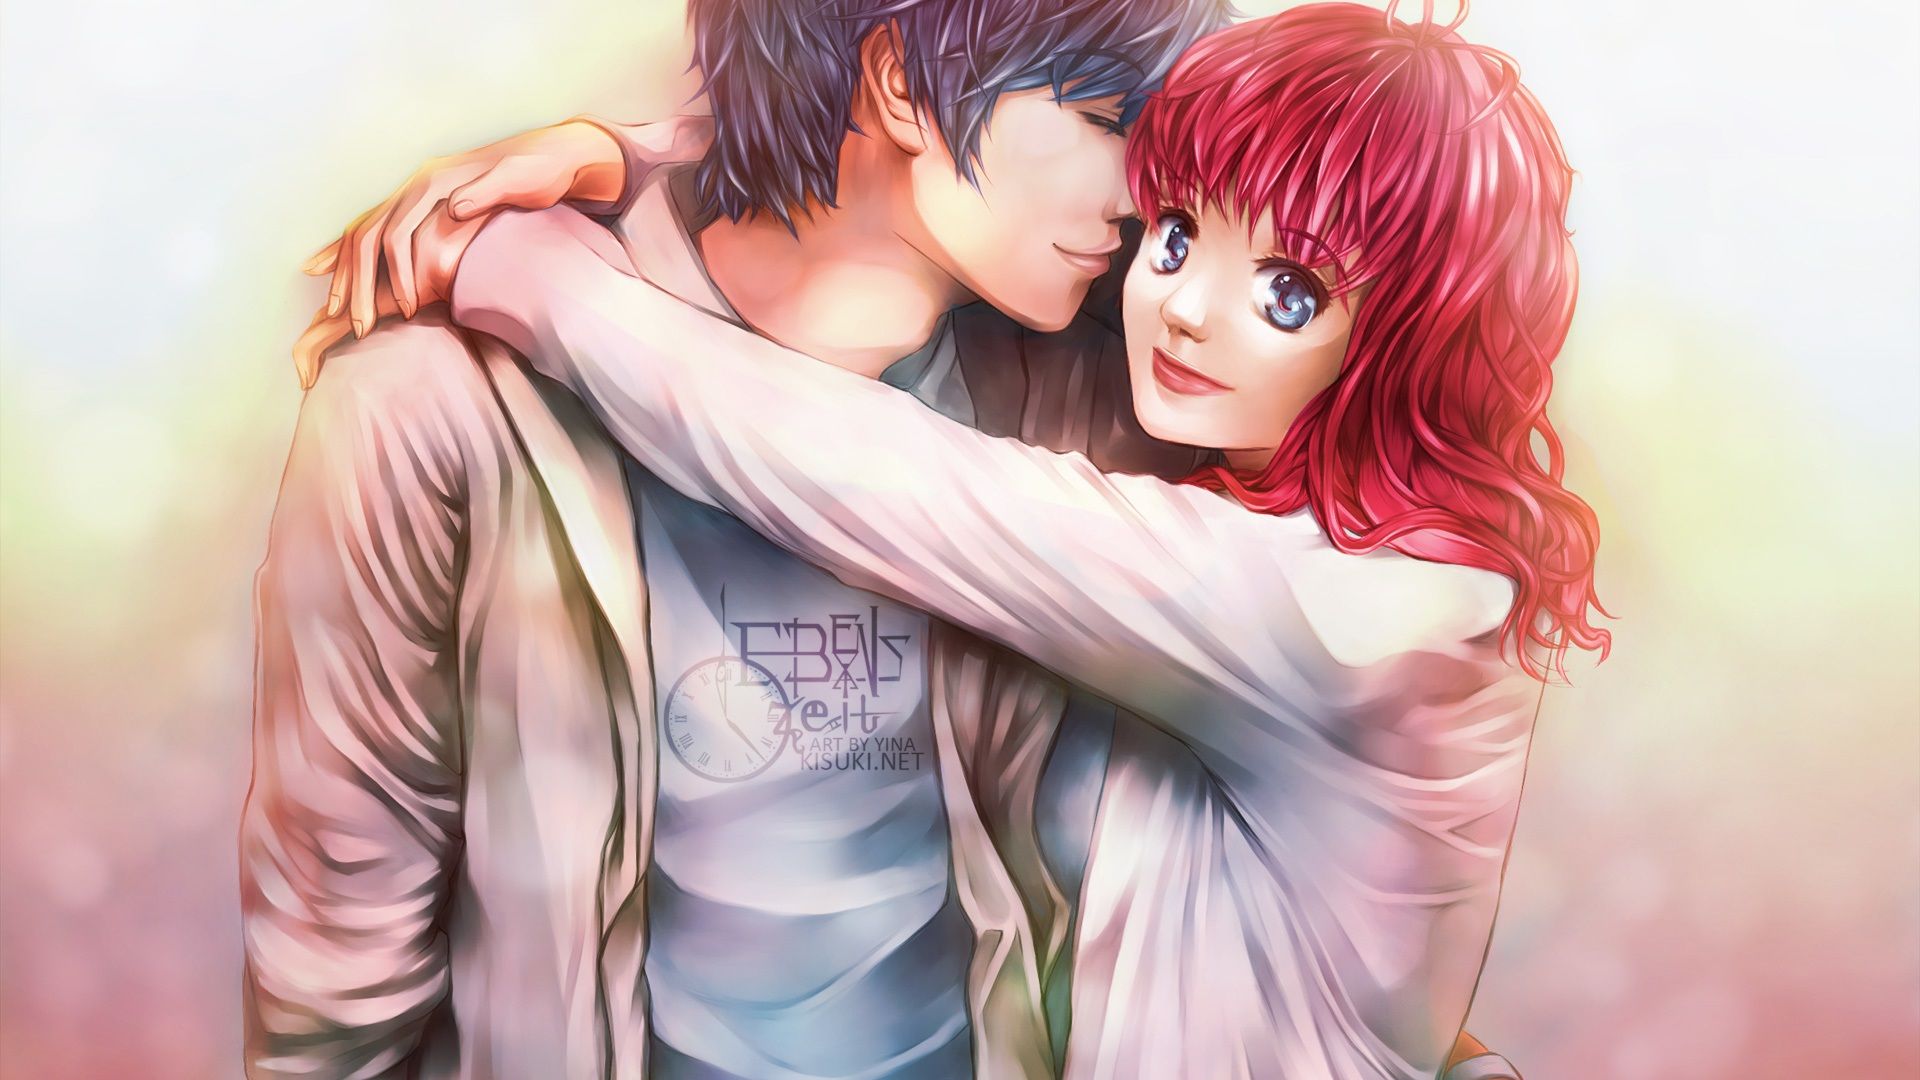 Red hair anime girl with her boyfriend Desktop Wallpaper